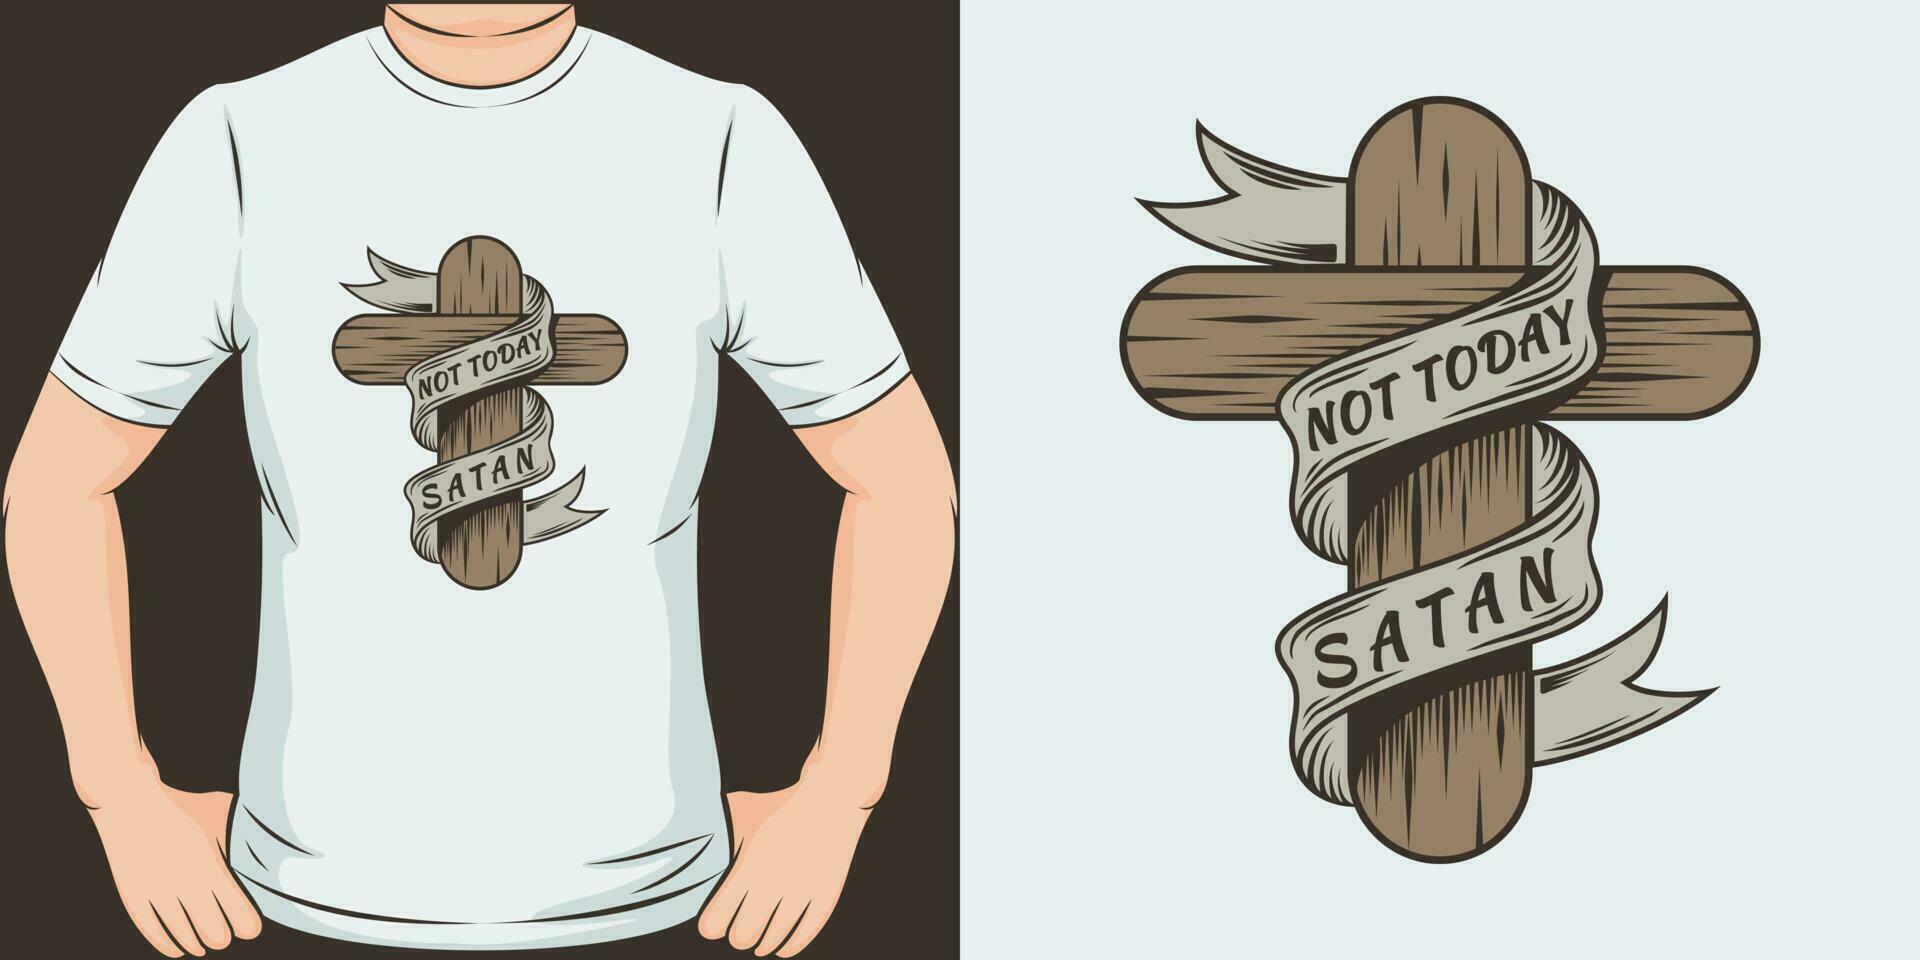 inte i dag satan, motiverande Citat t-shirt design. vektor